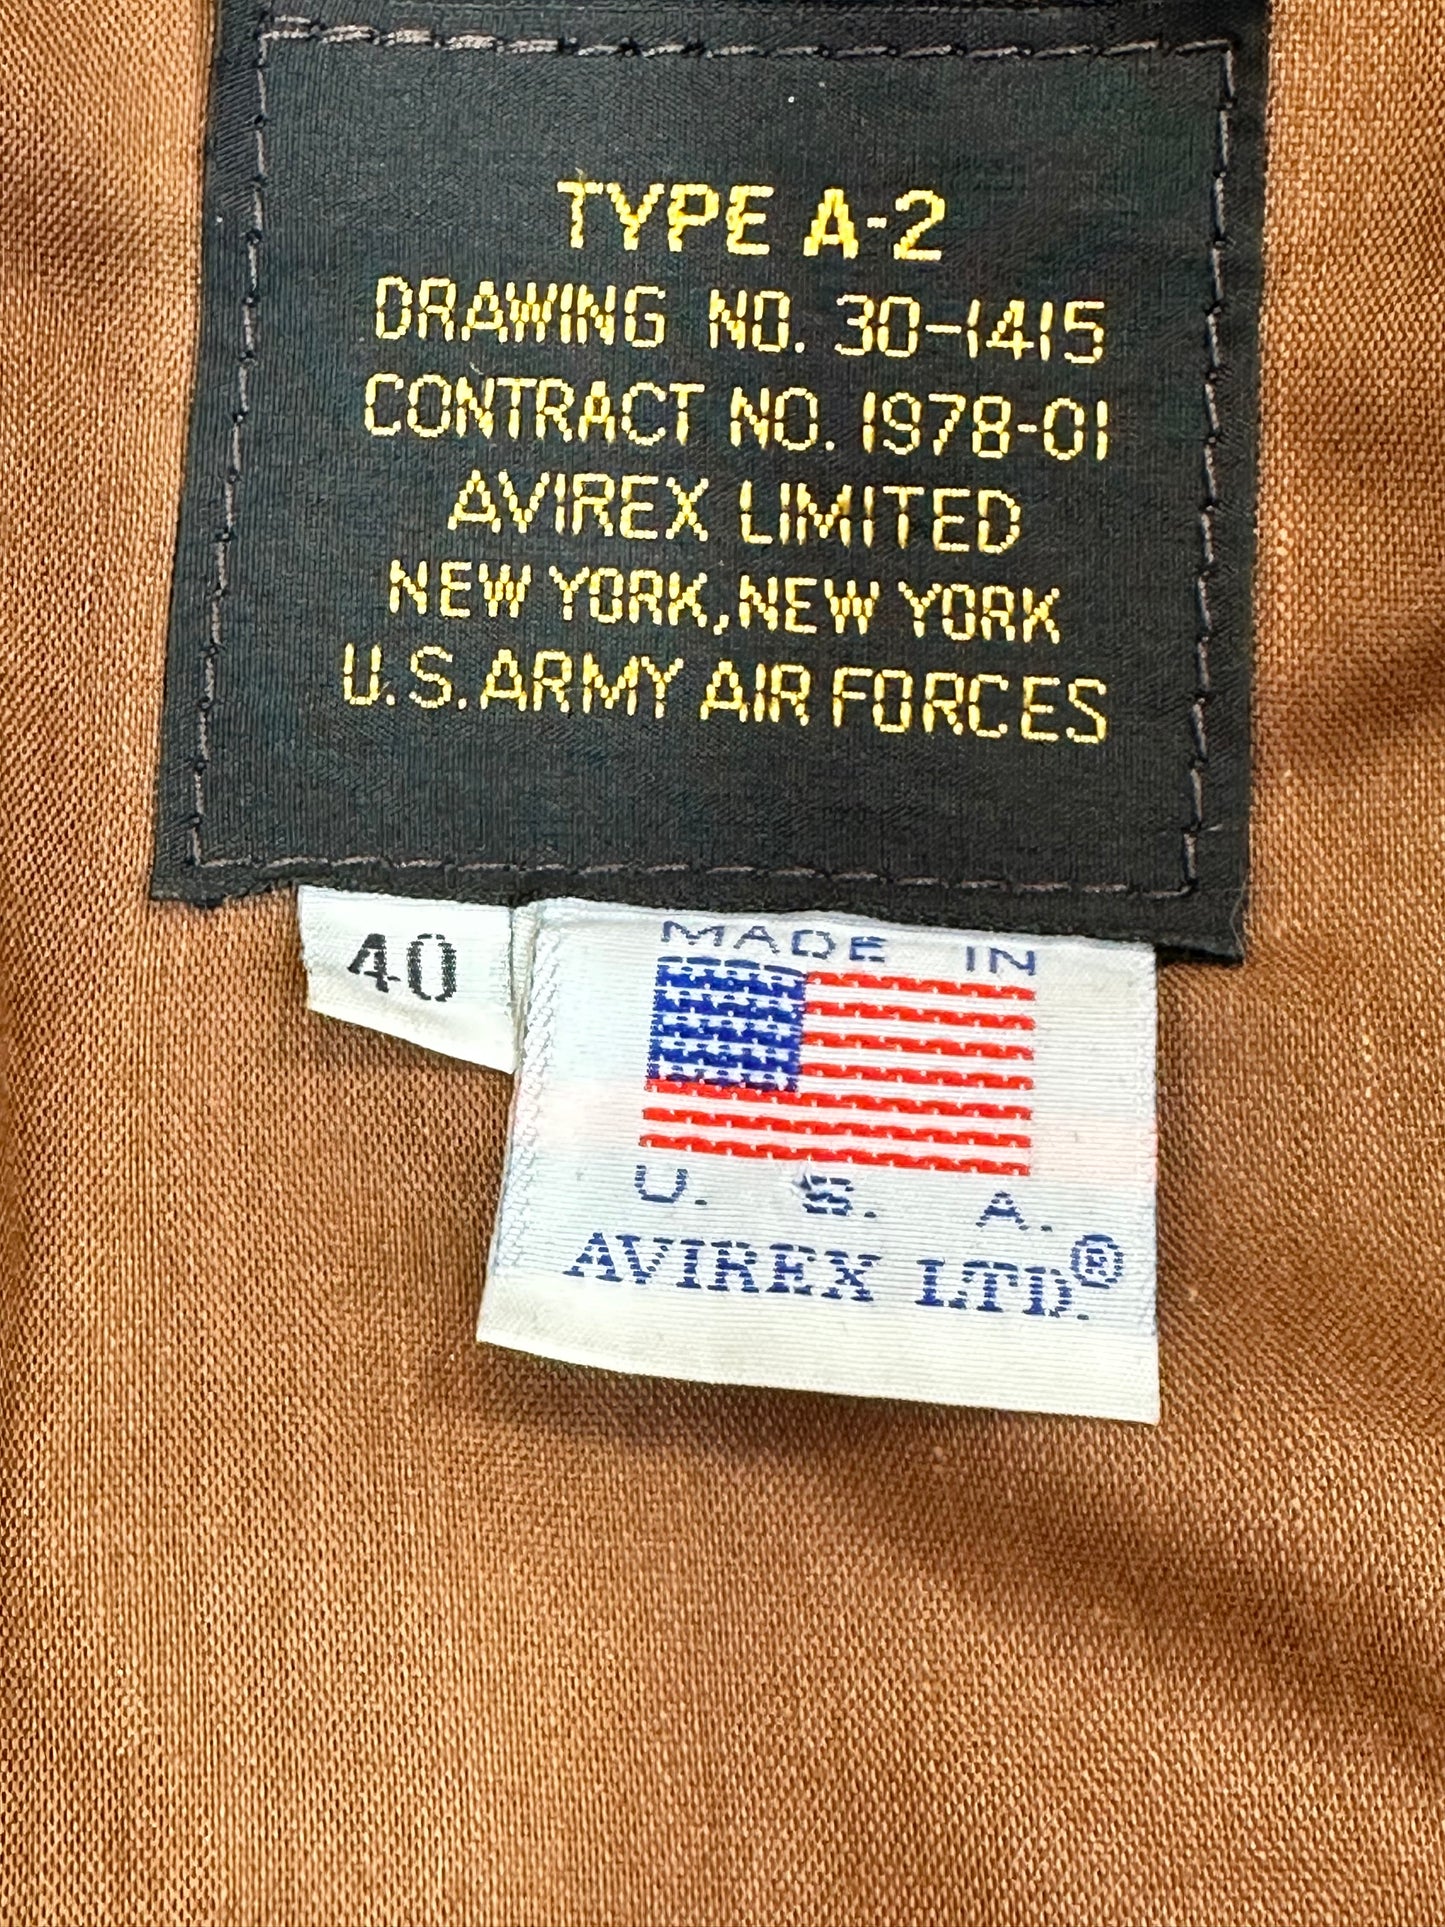 Vintage Avirex Brown Leather Jacket (Unisex)